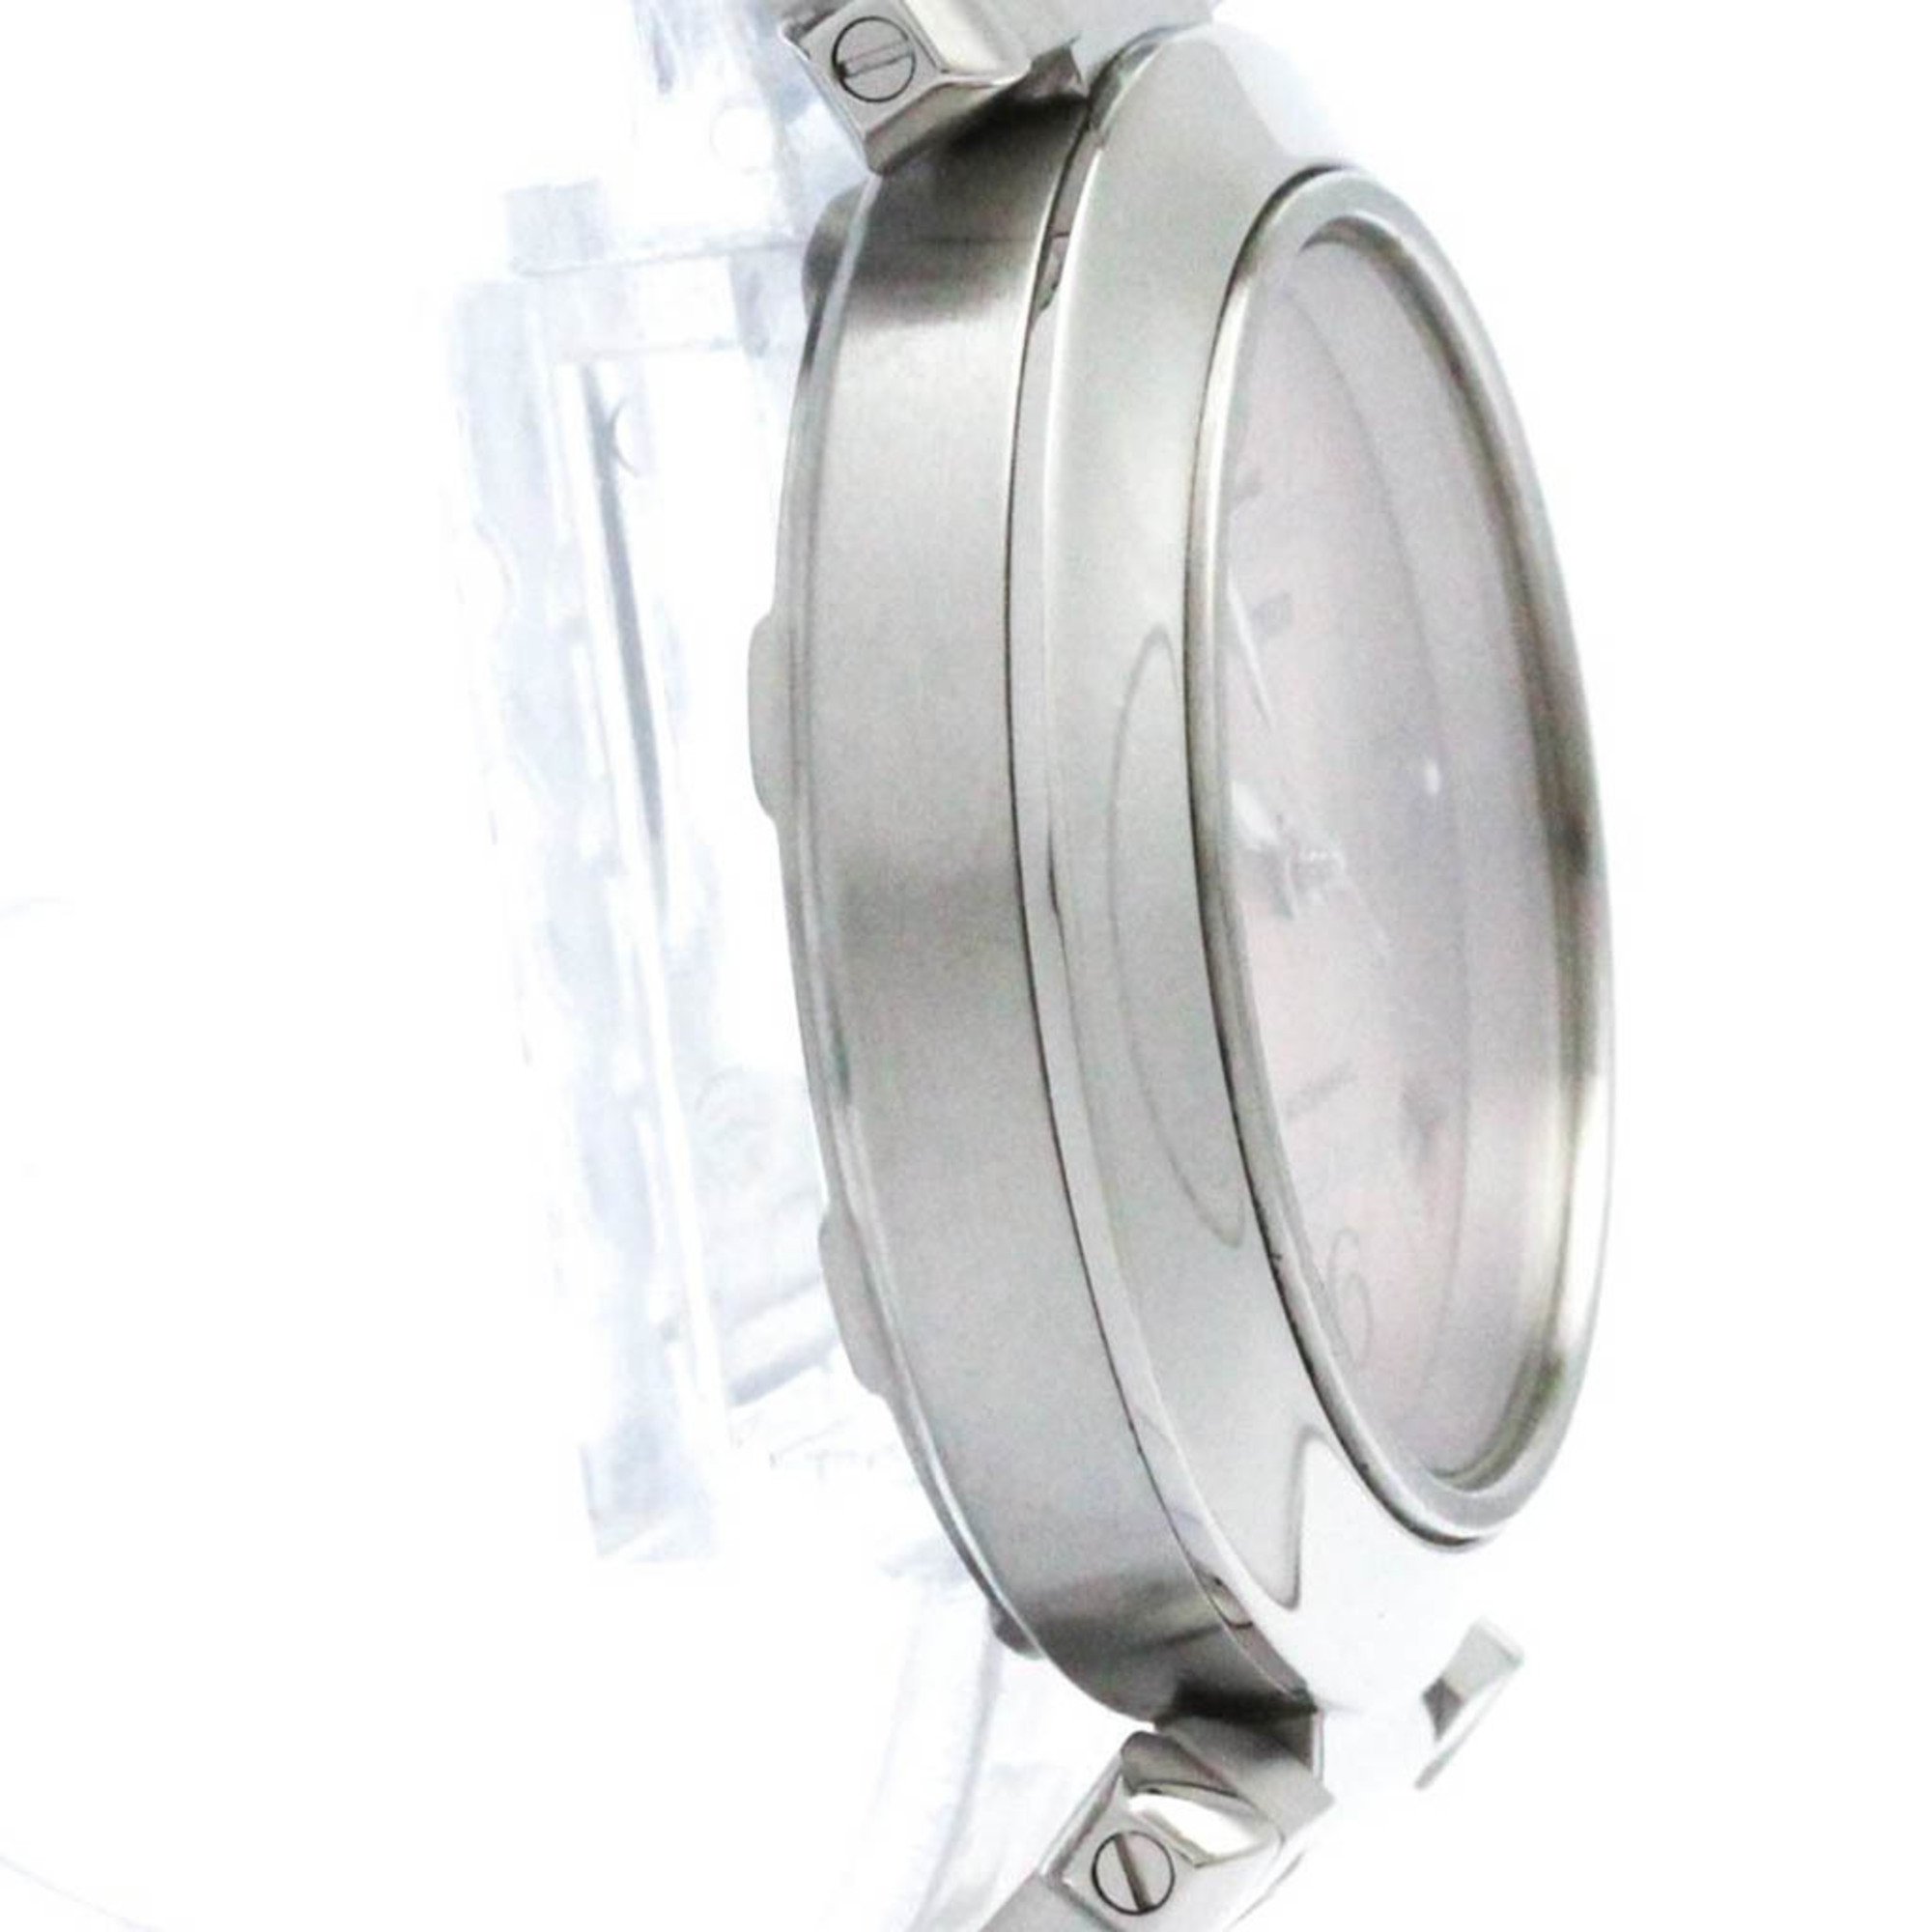 Polished CARTIER Pasha C Steel Automatic Unisex Watch W31075M7 BF573193